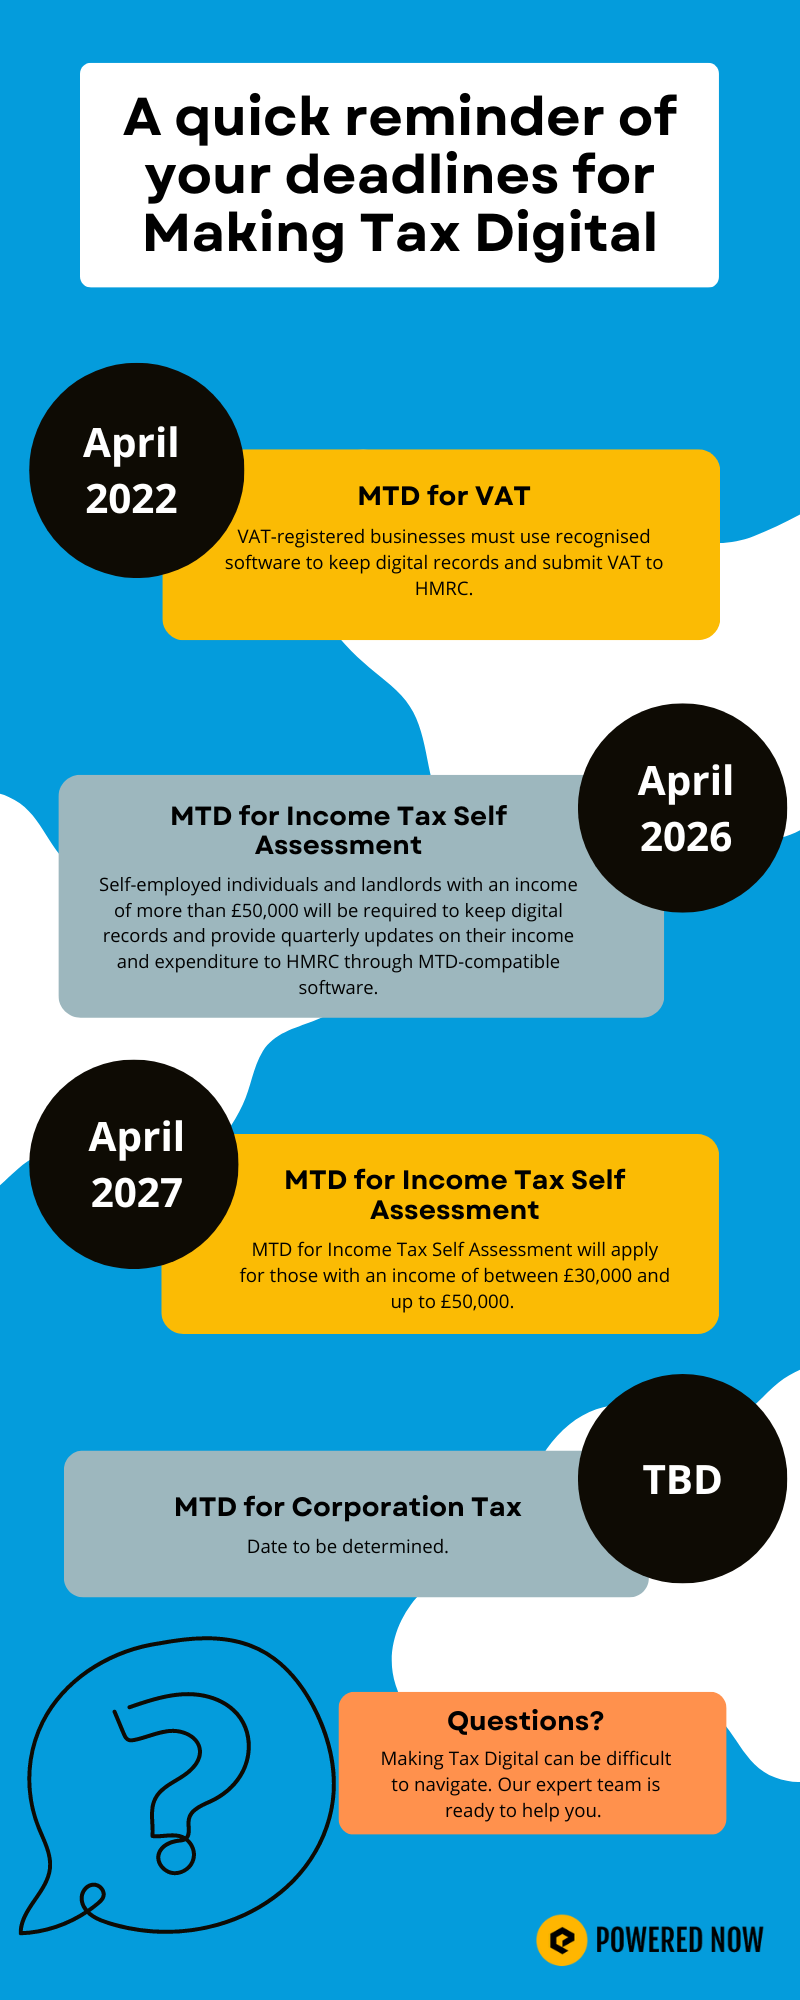 Making tax digital deadlines infographic